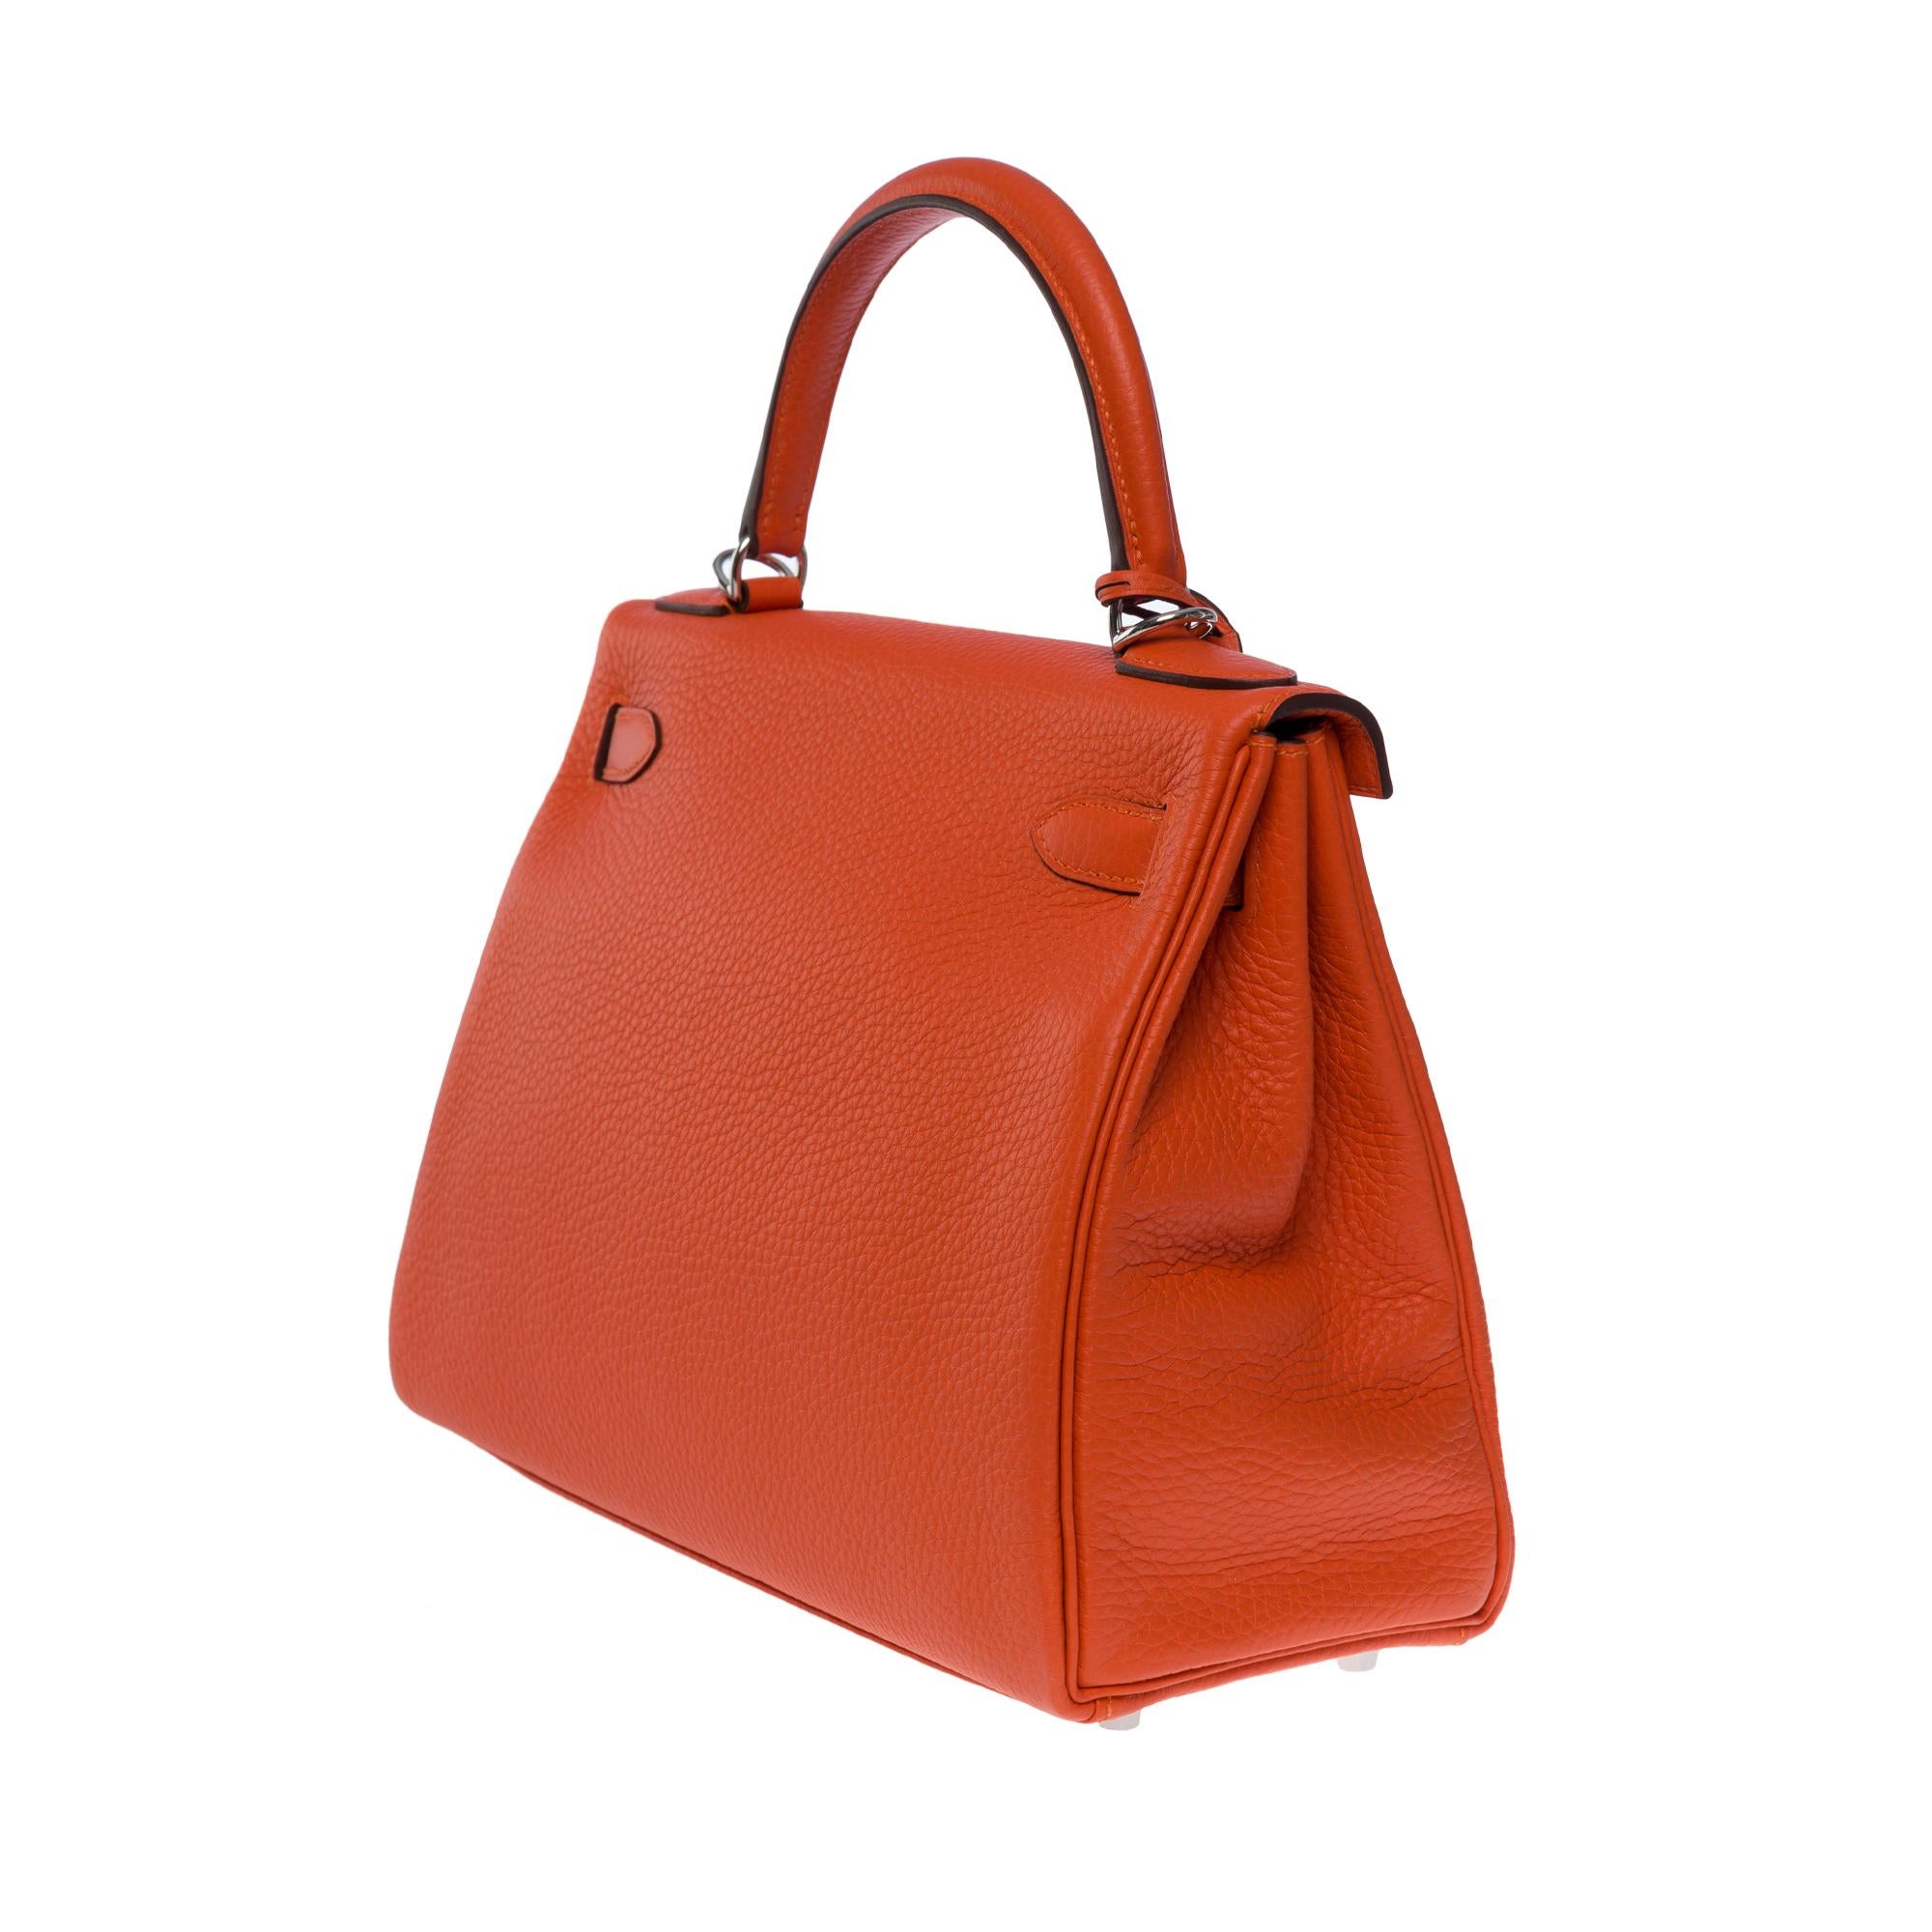 New Amazing Hermes Kelly 28 retourne handbag strap in Orange Feu leather, SHW For Sale 1